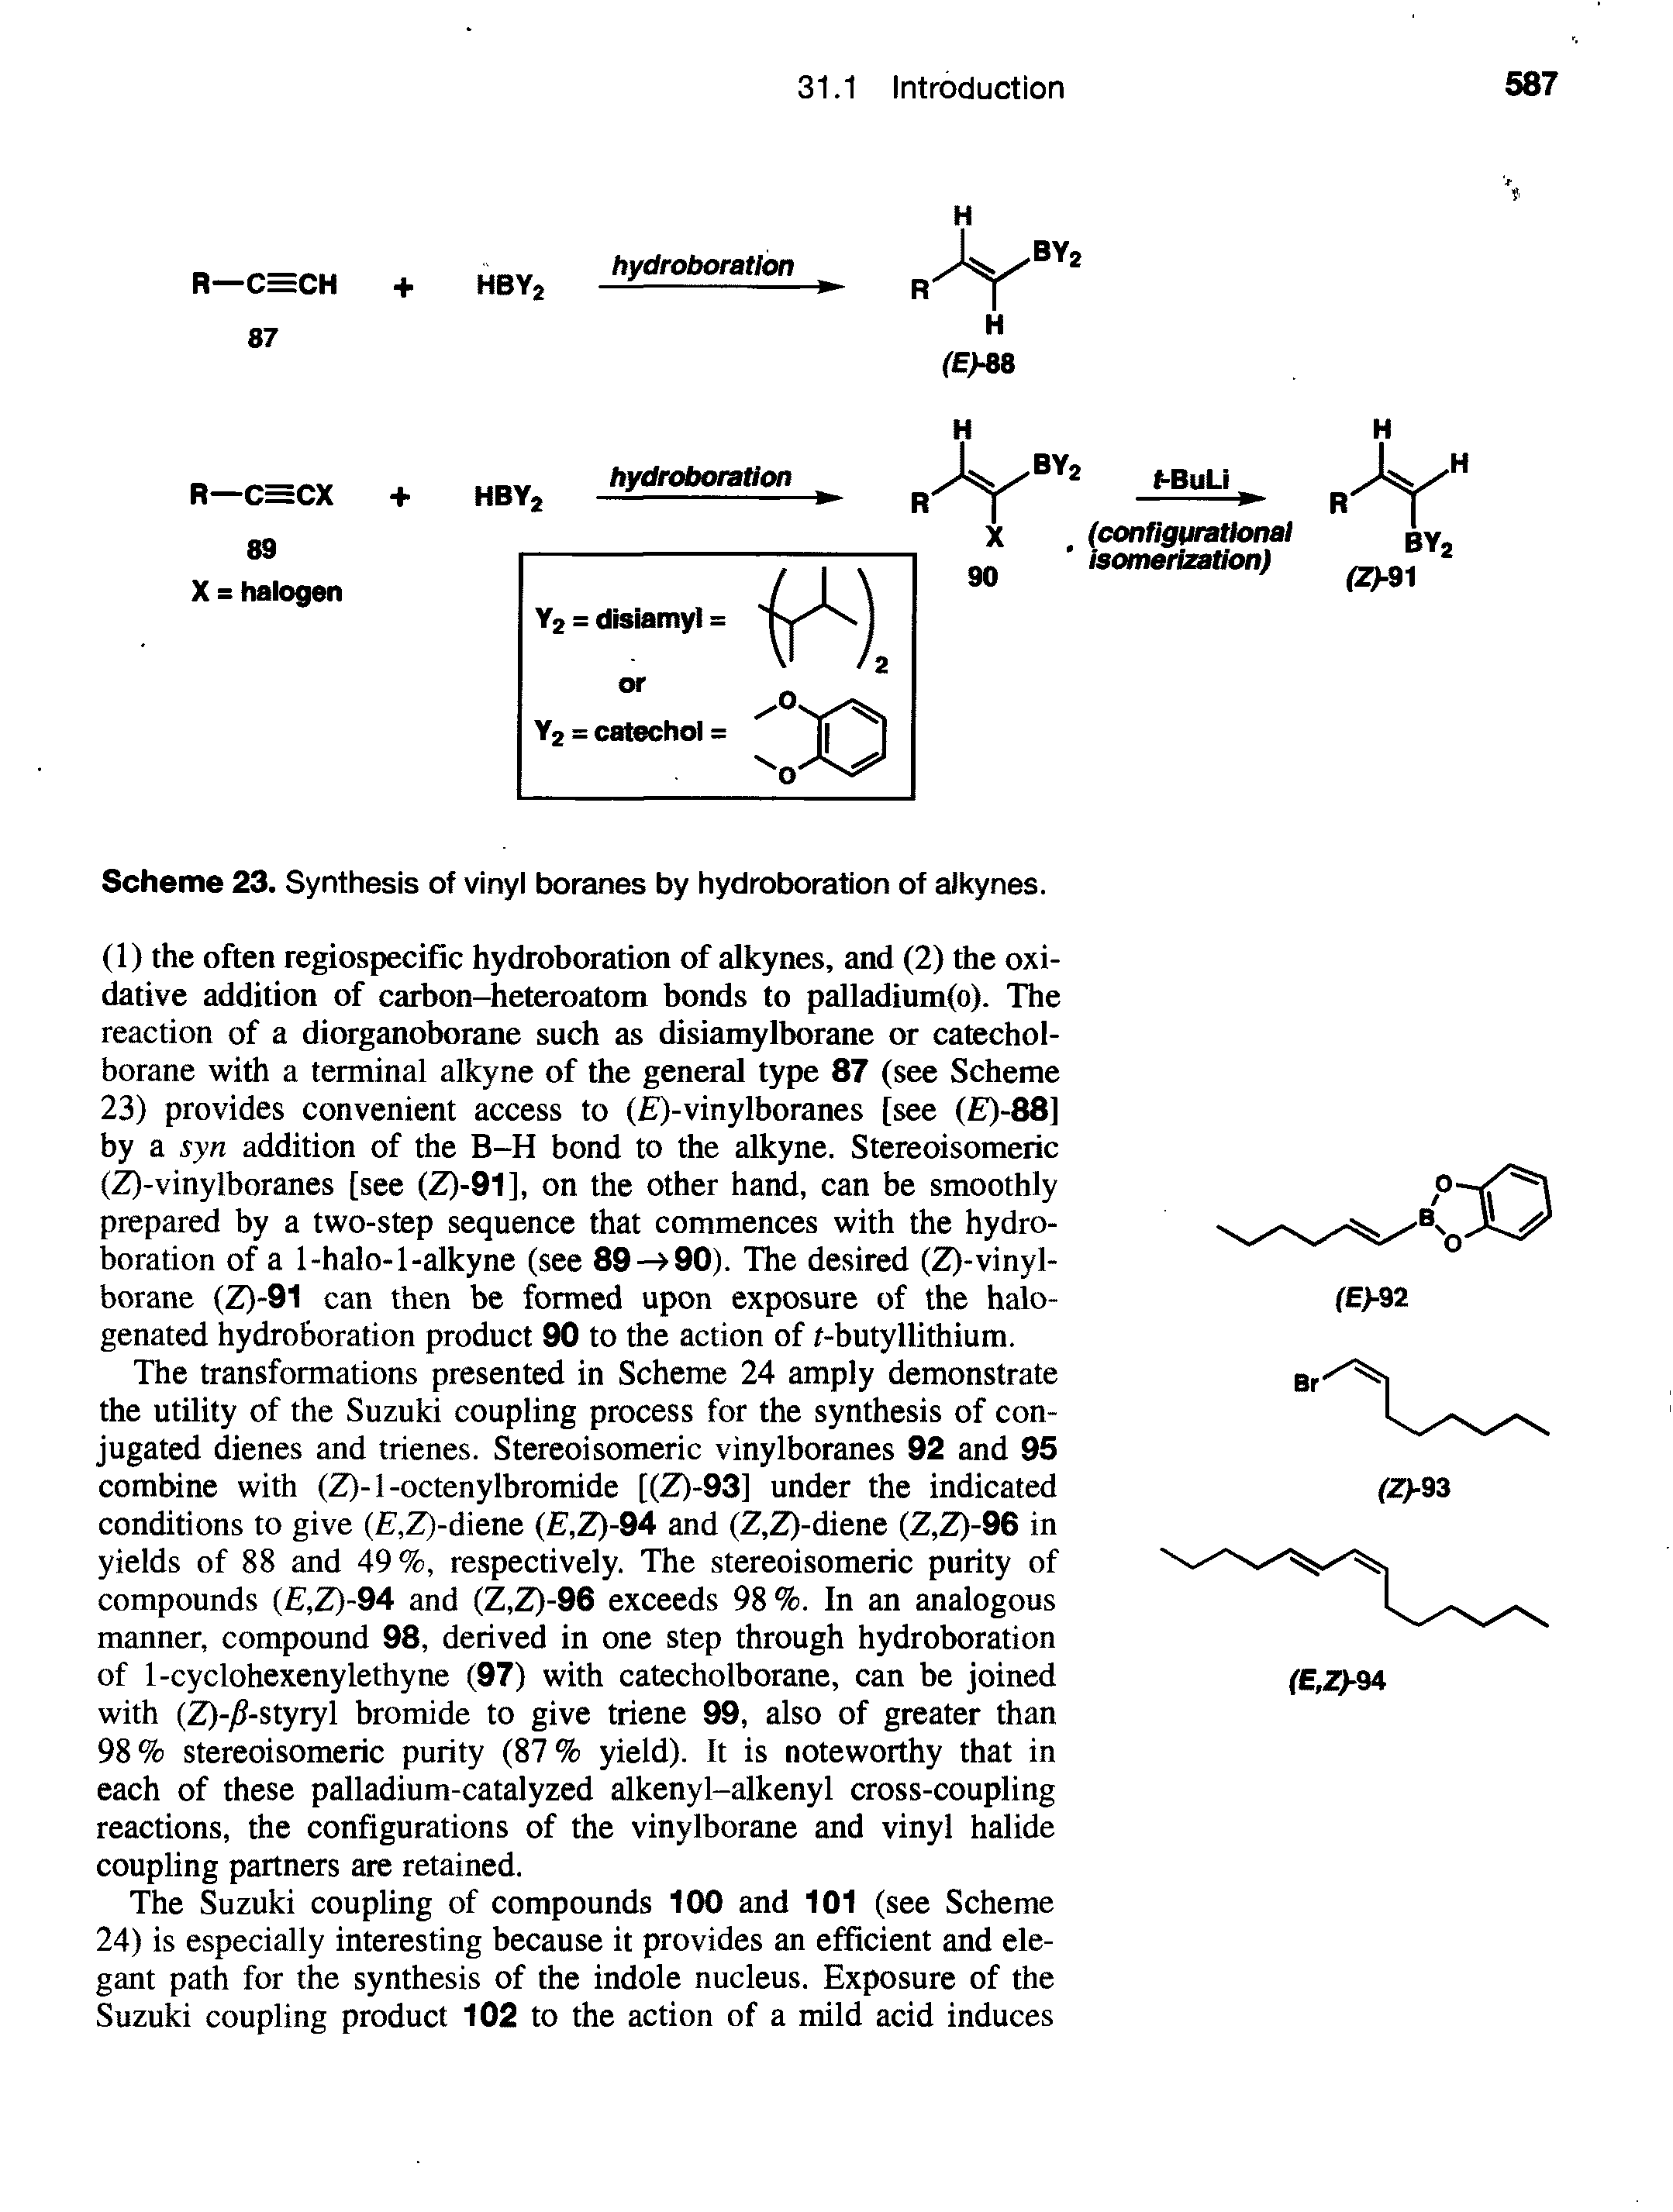 Scheme 23. Synthesis of vinyl boranes by hydroboration of alkynes.